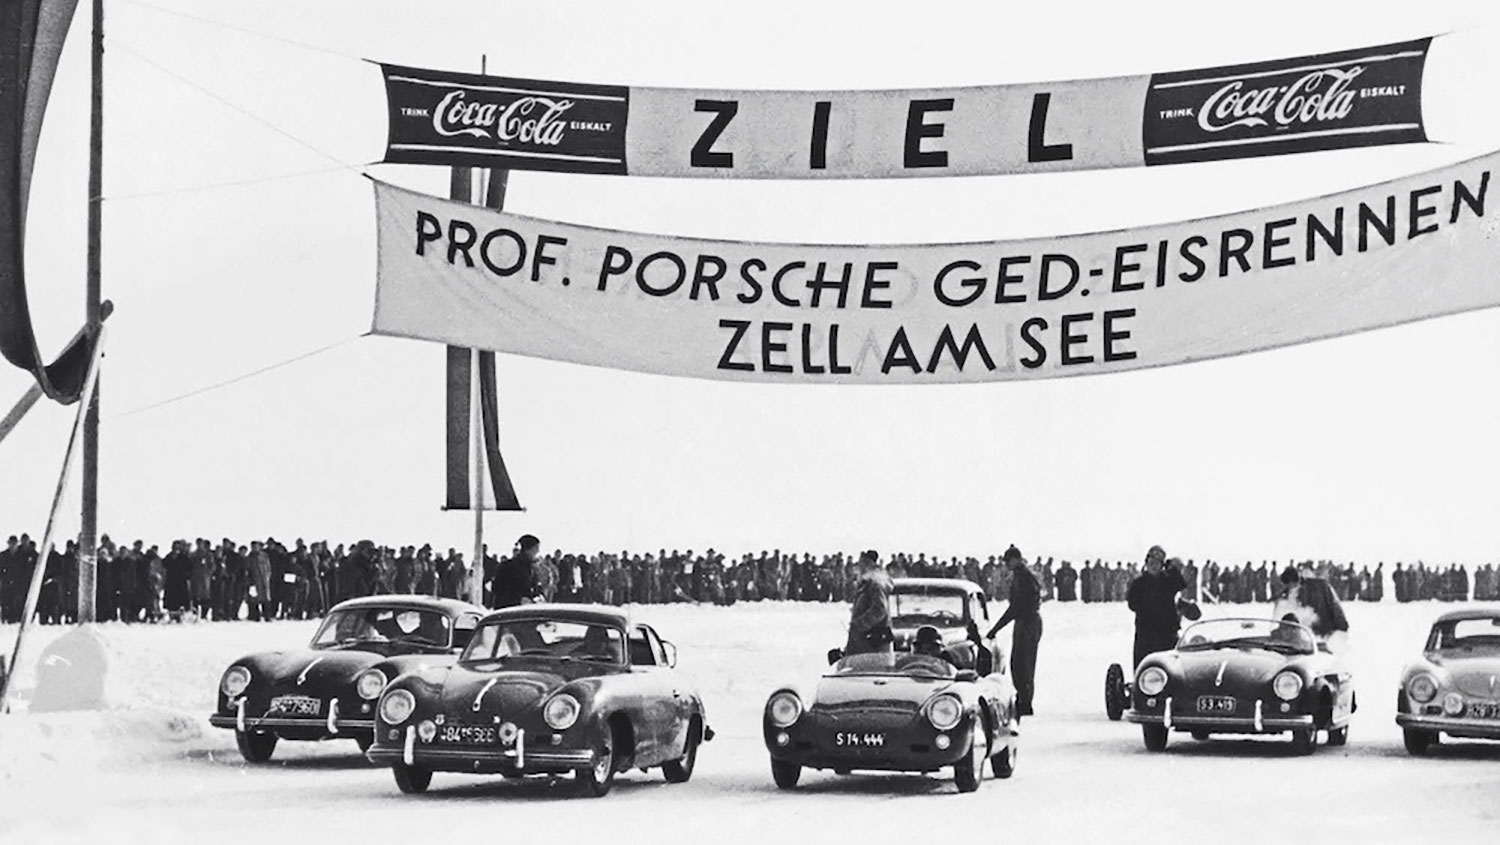 GP-Ice-Race-Historische-Bilder-2-Credit-Porsche